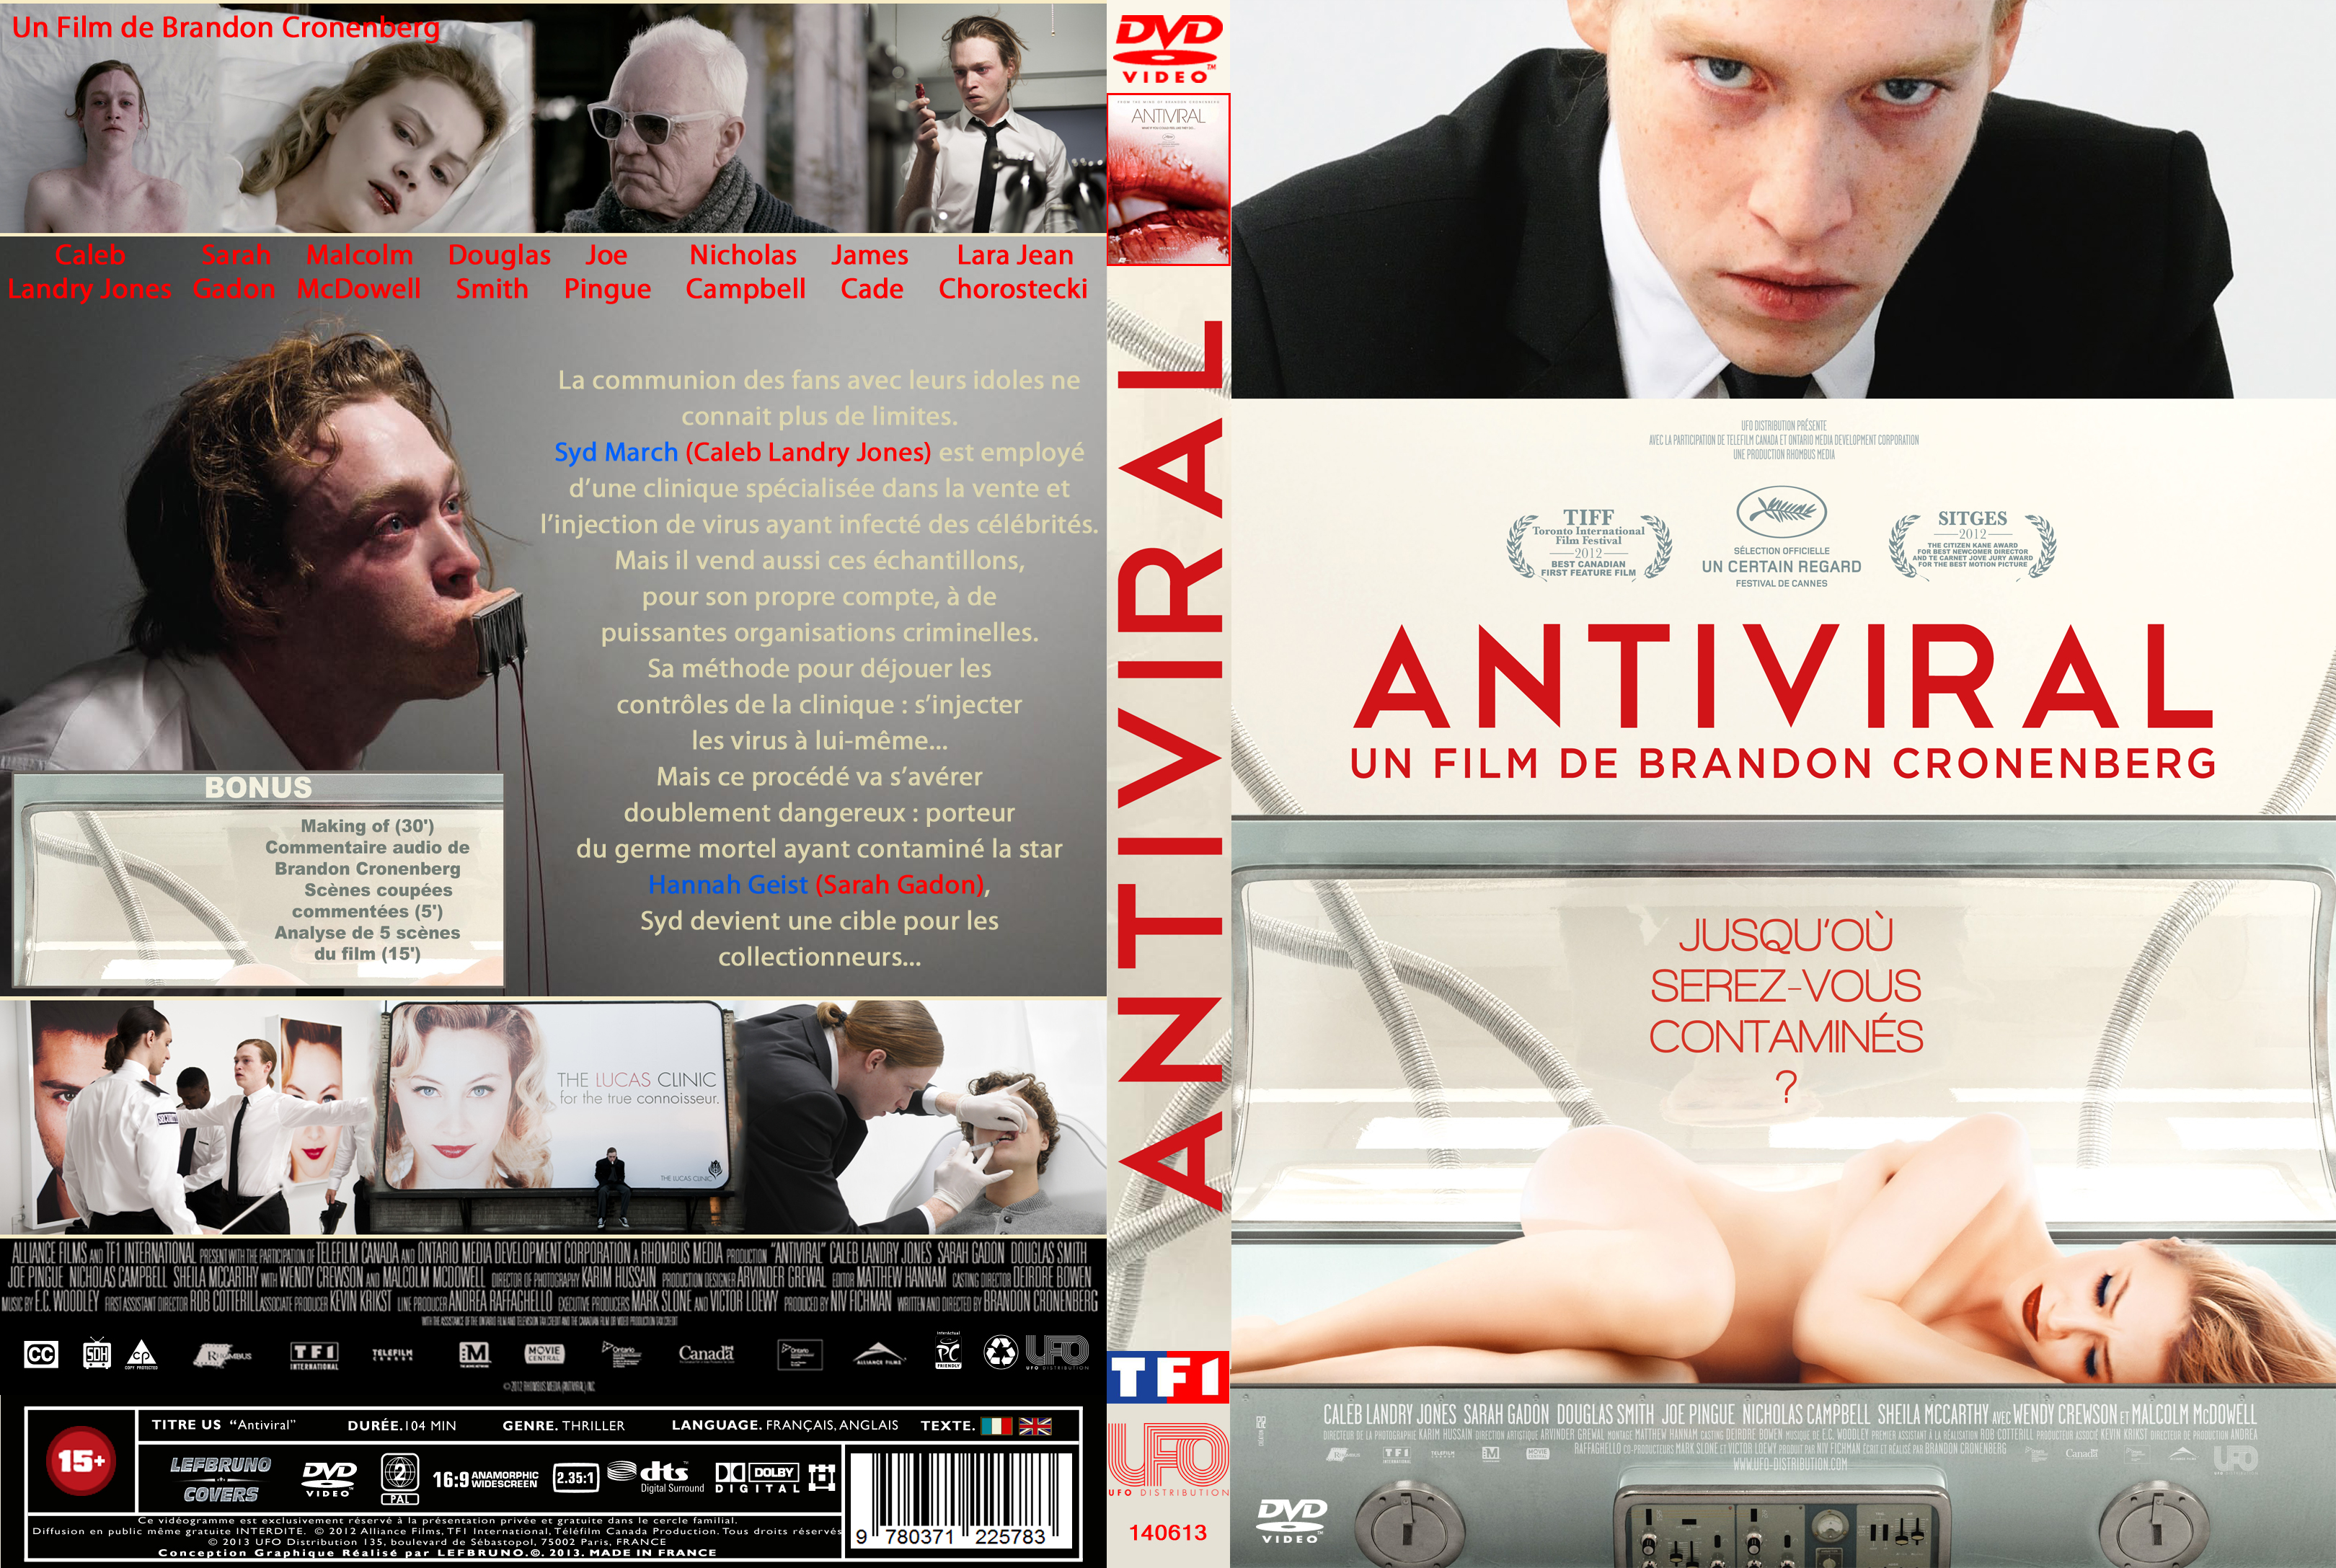 Jaquette DVD Antiviral custom